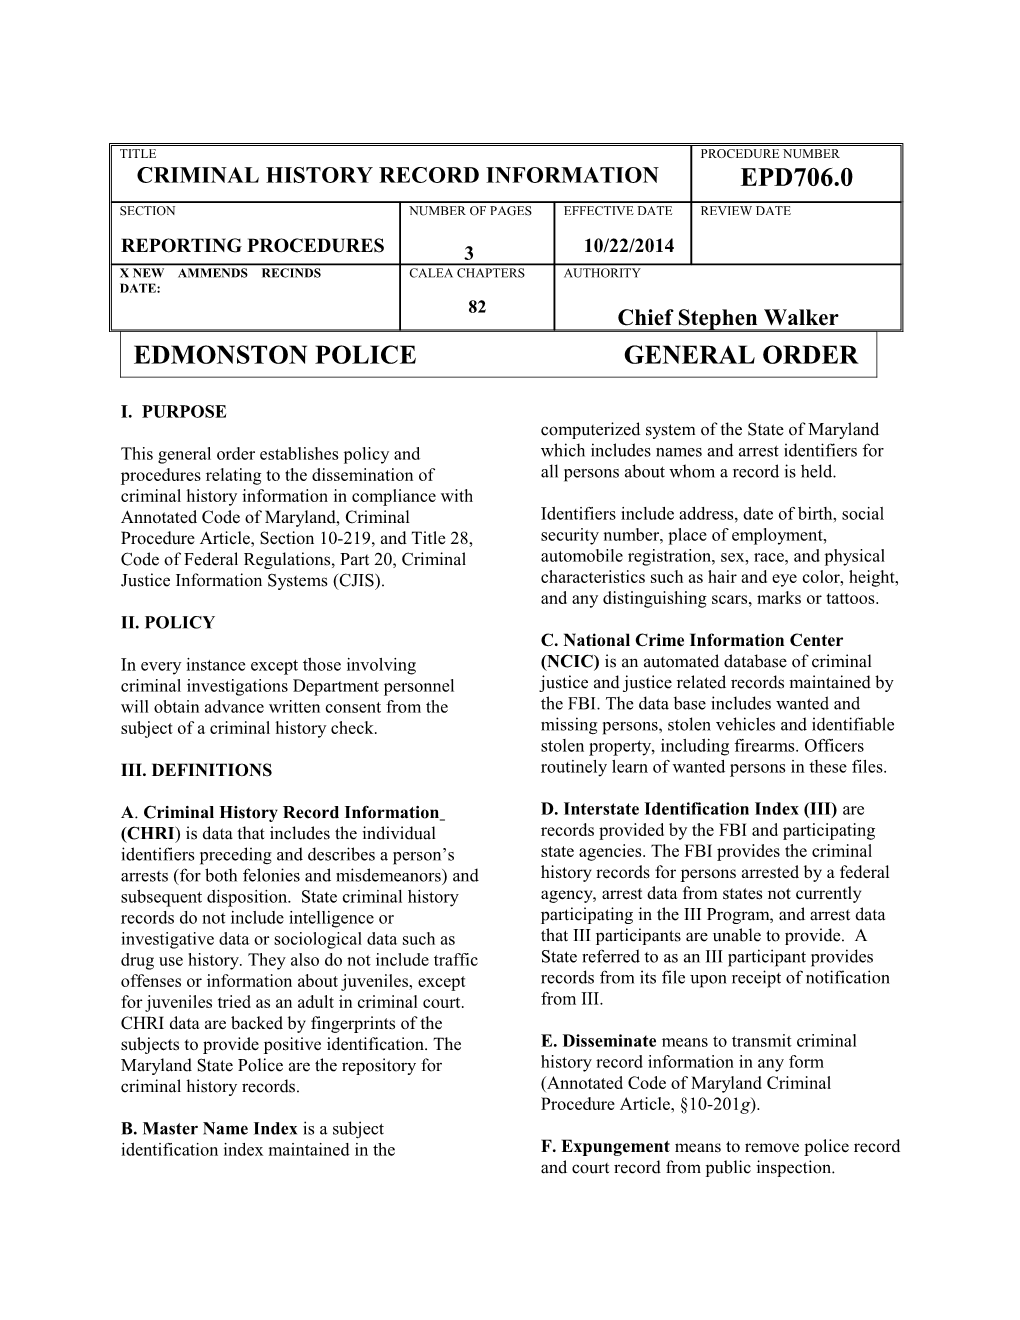 Criminal History Record Information (Chri)Epd706.0